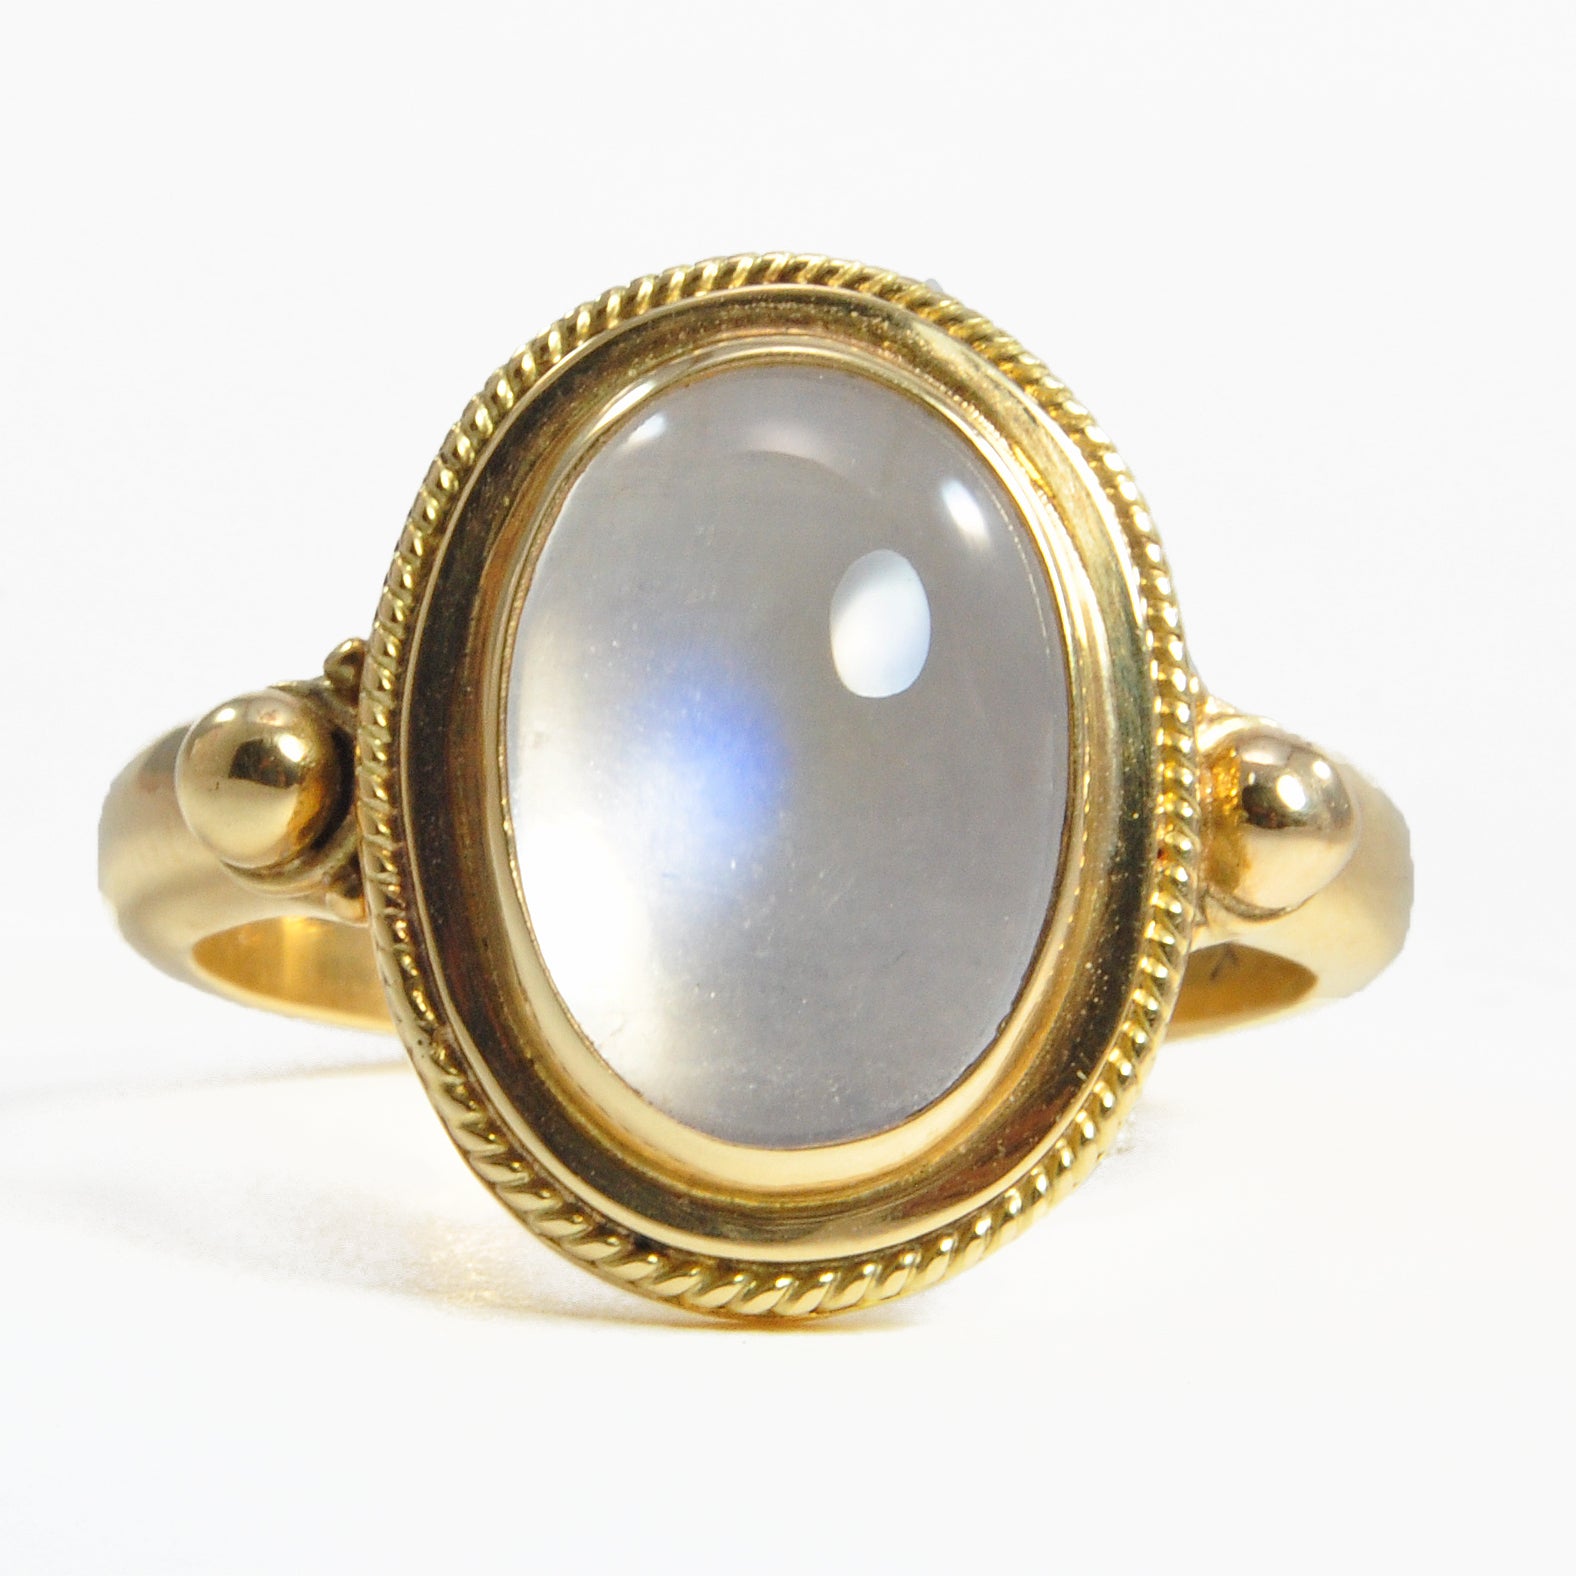 Blue Moonstone 13.35 mm 3.91 ct Oval Cabochon 18K Handcrafted Gemstone Ring - UO-275 - Crystalarium